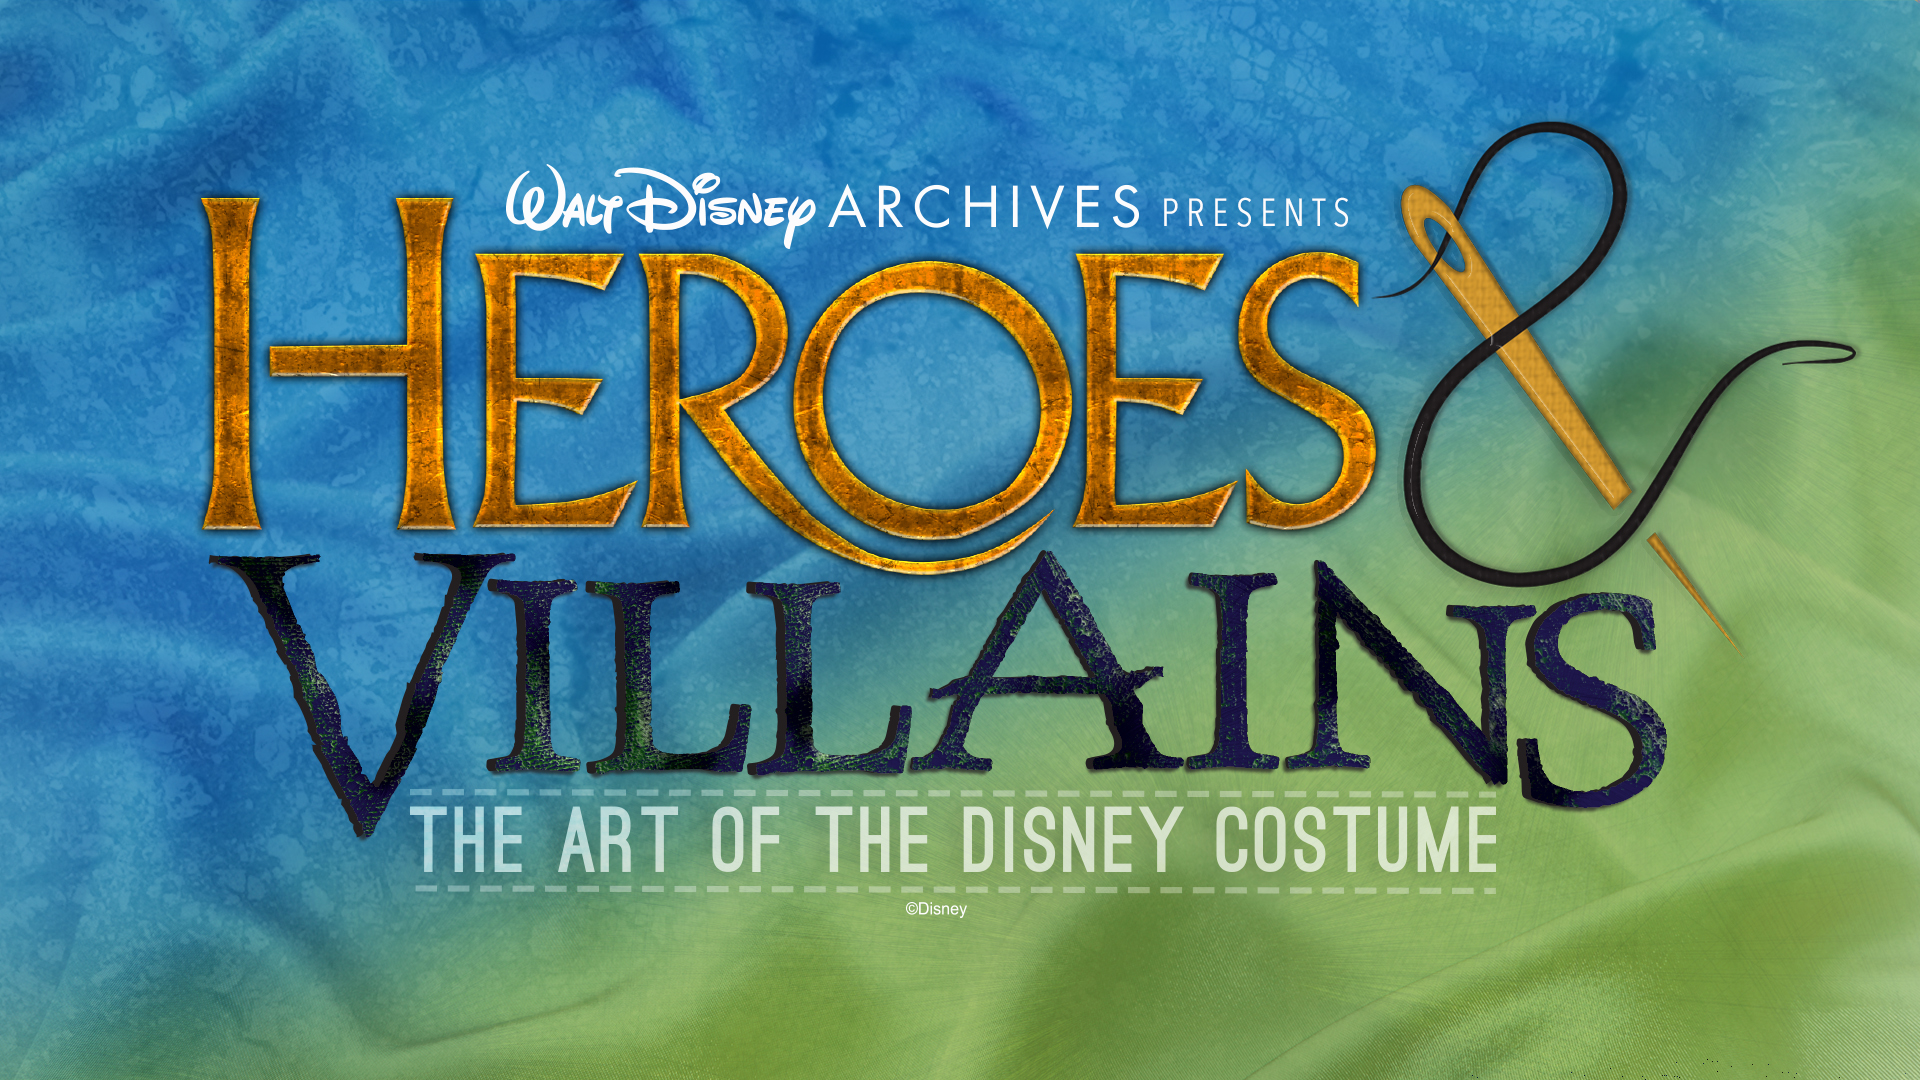 Disney Announces New D23 Expo 'Heroes and Villains' Exhibit